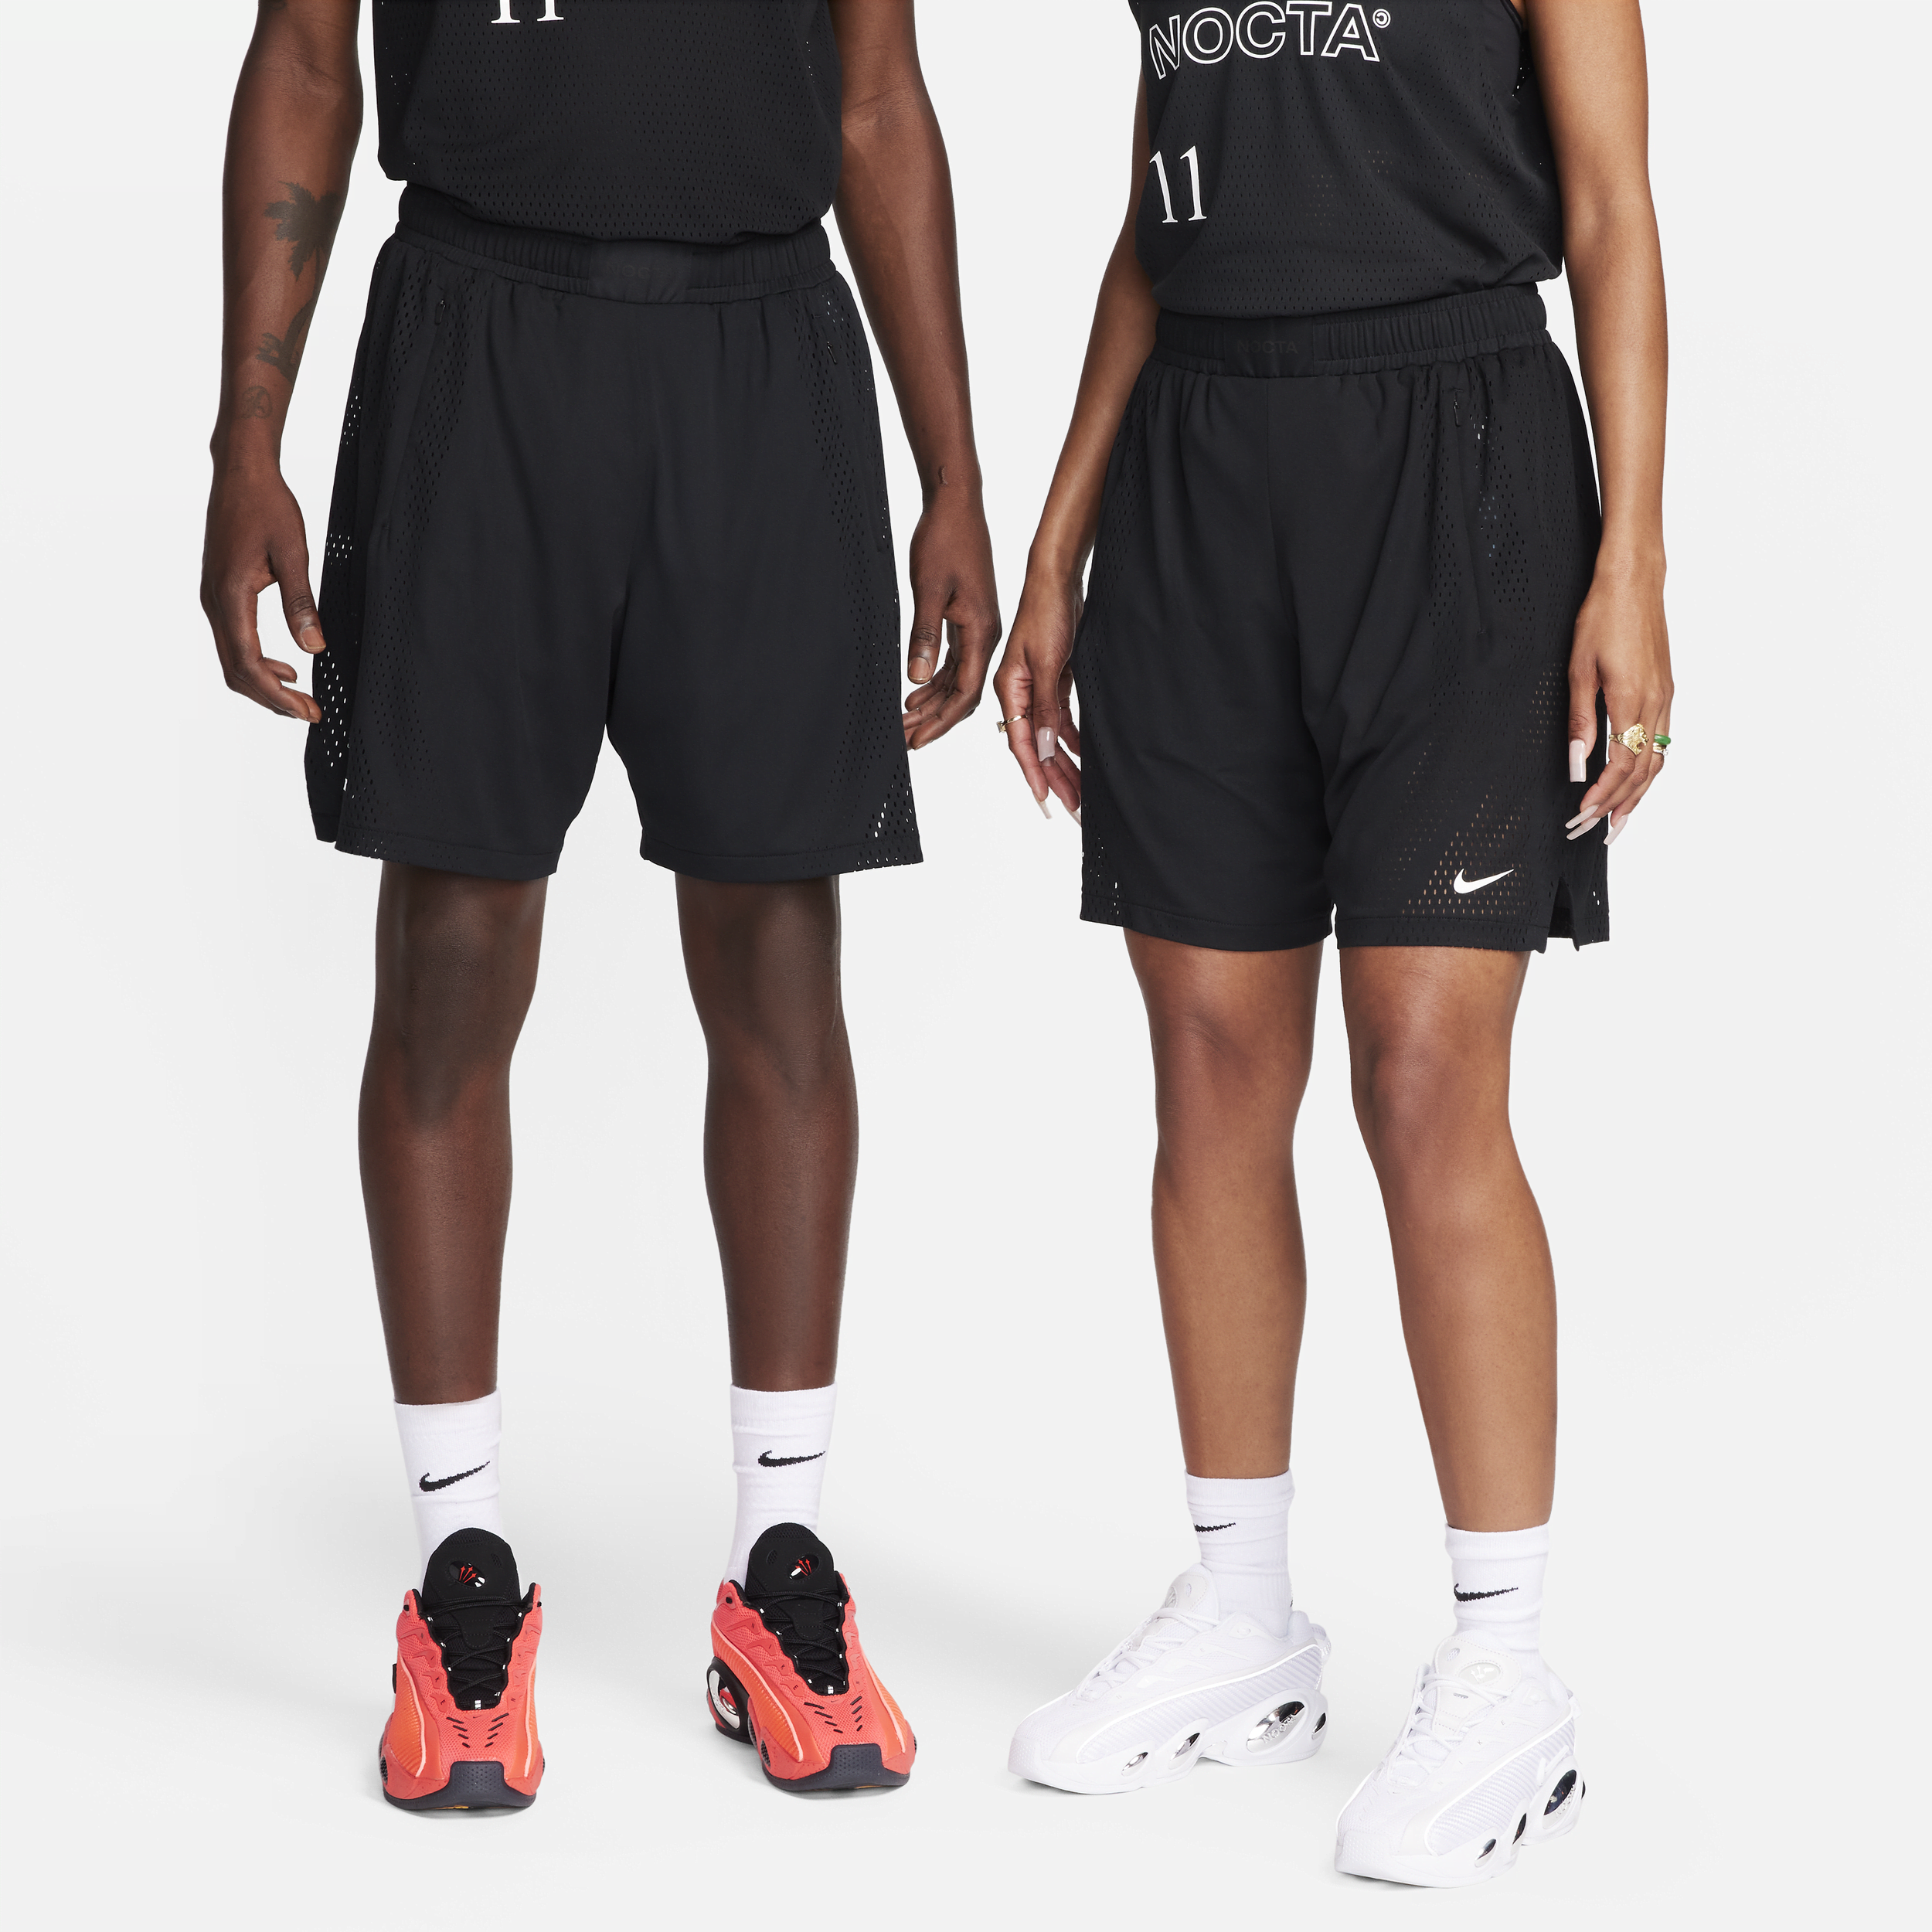 Nike NOCTA Dri-FIT herenshorts - Zwart